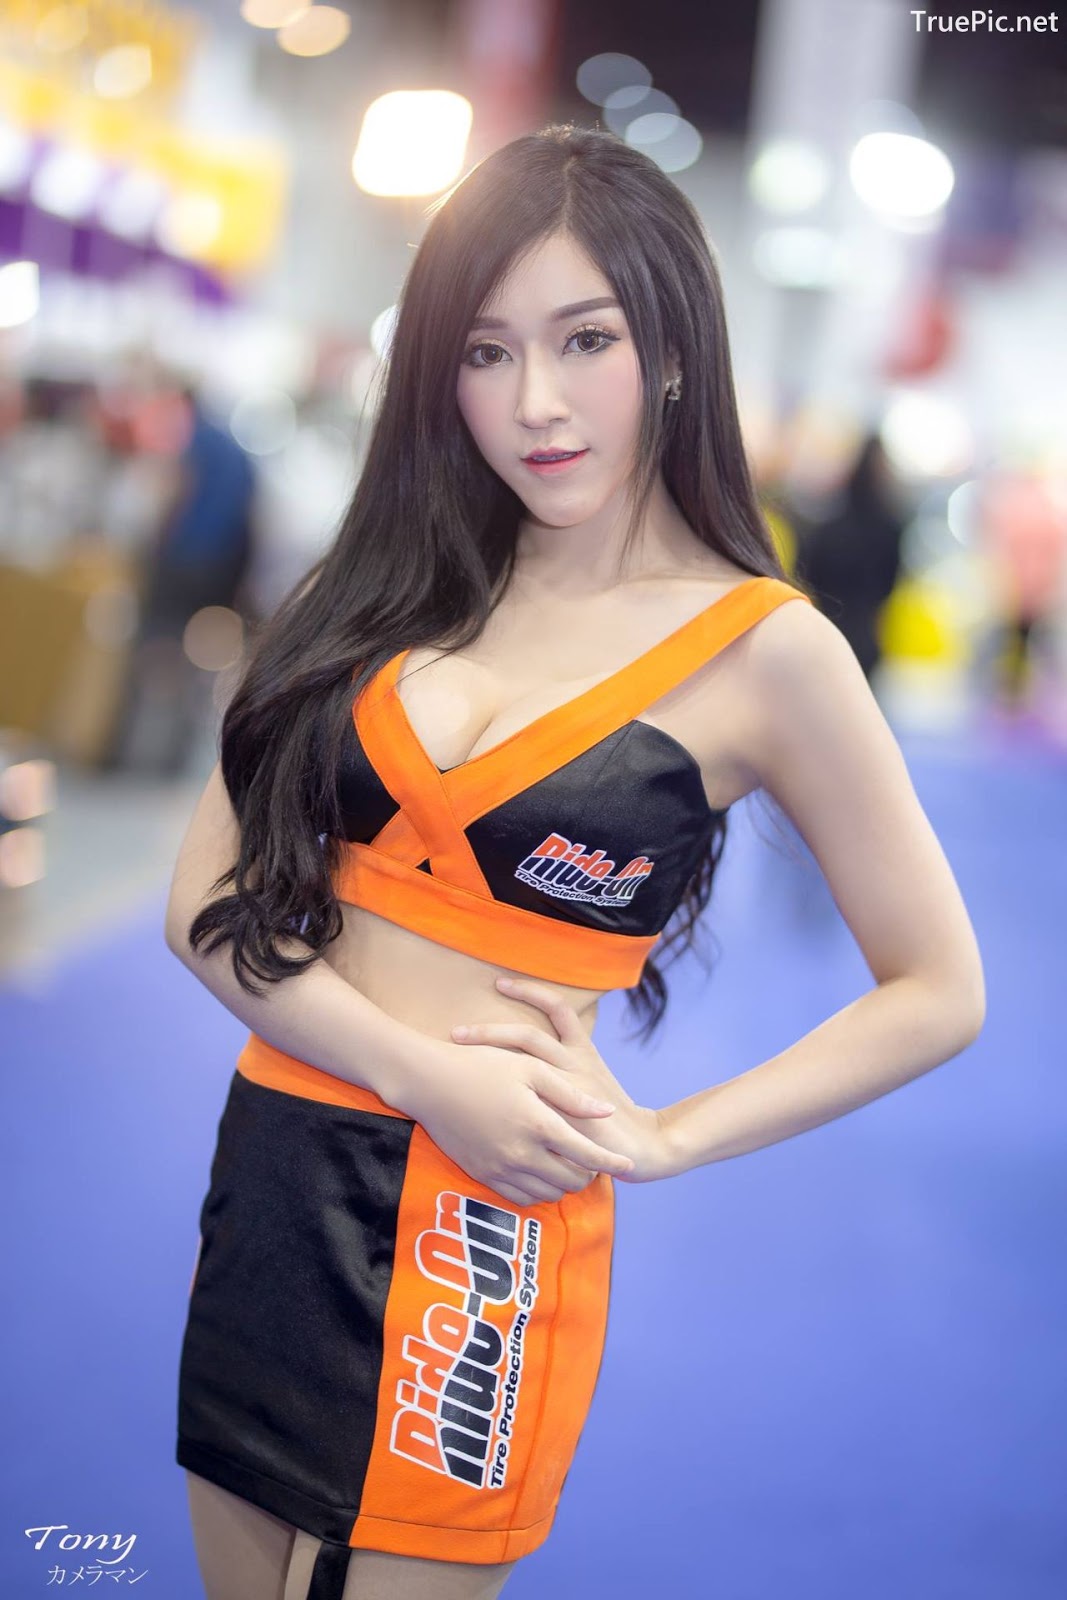 Image-Thailand-Hot-Model-Thai-Racing-Girl-At-Big-Motor-2018-TruePic.net- Picture-56